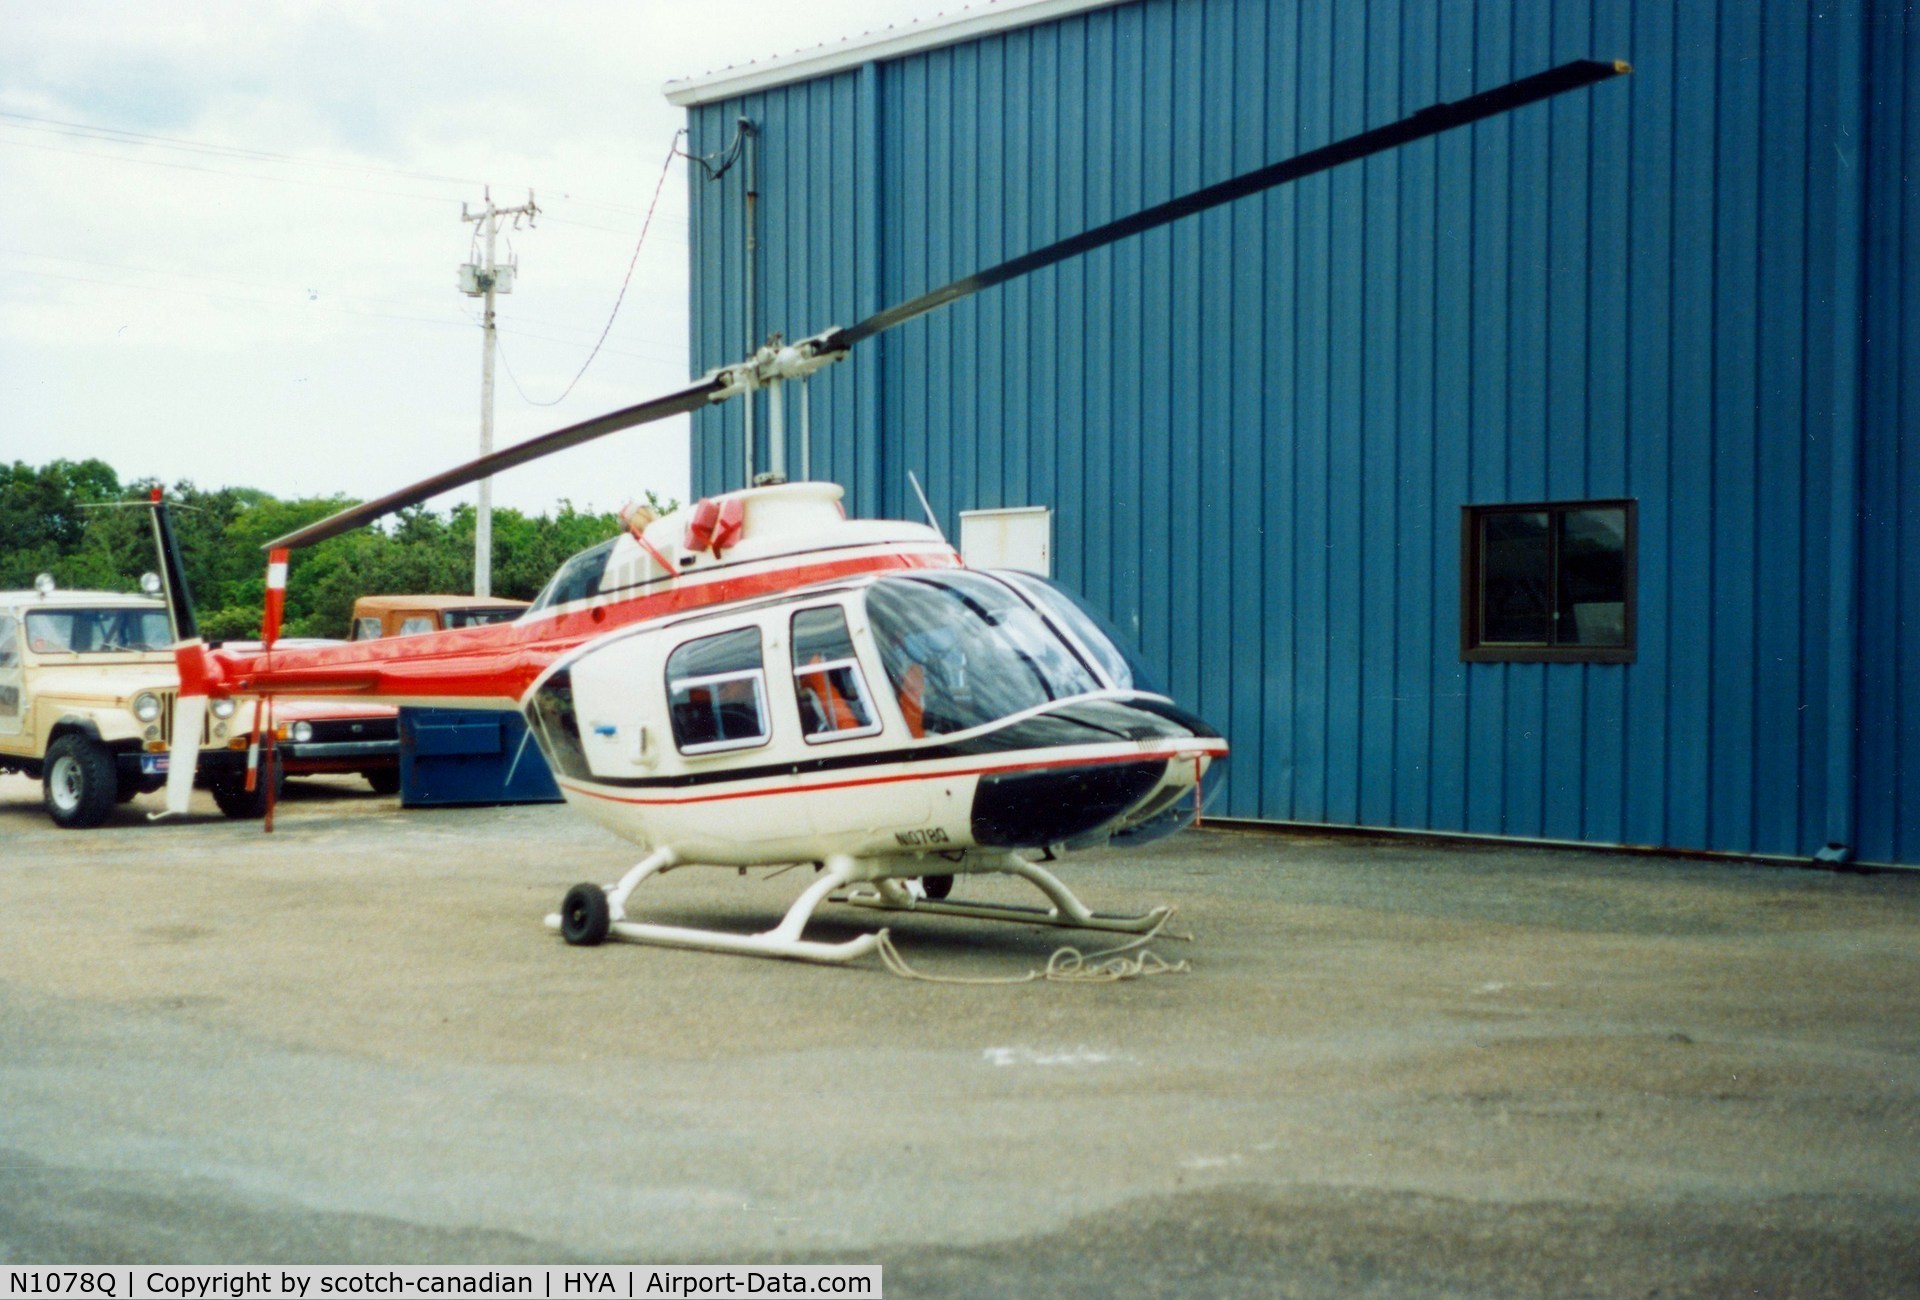 N1078Q, 1978 Bell 206B JetRanger III C/N 2425, 1978 Bell 206B N1078Q at Barnstable Municipal Airport, Hyannis, MA - July 1986